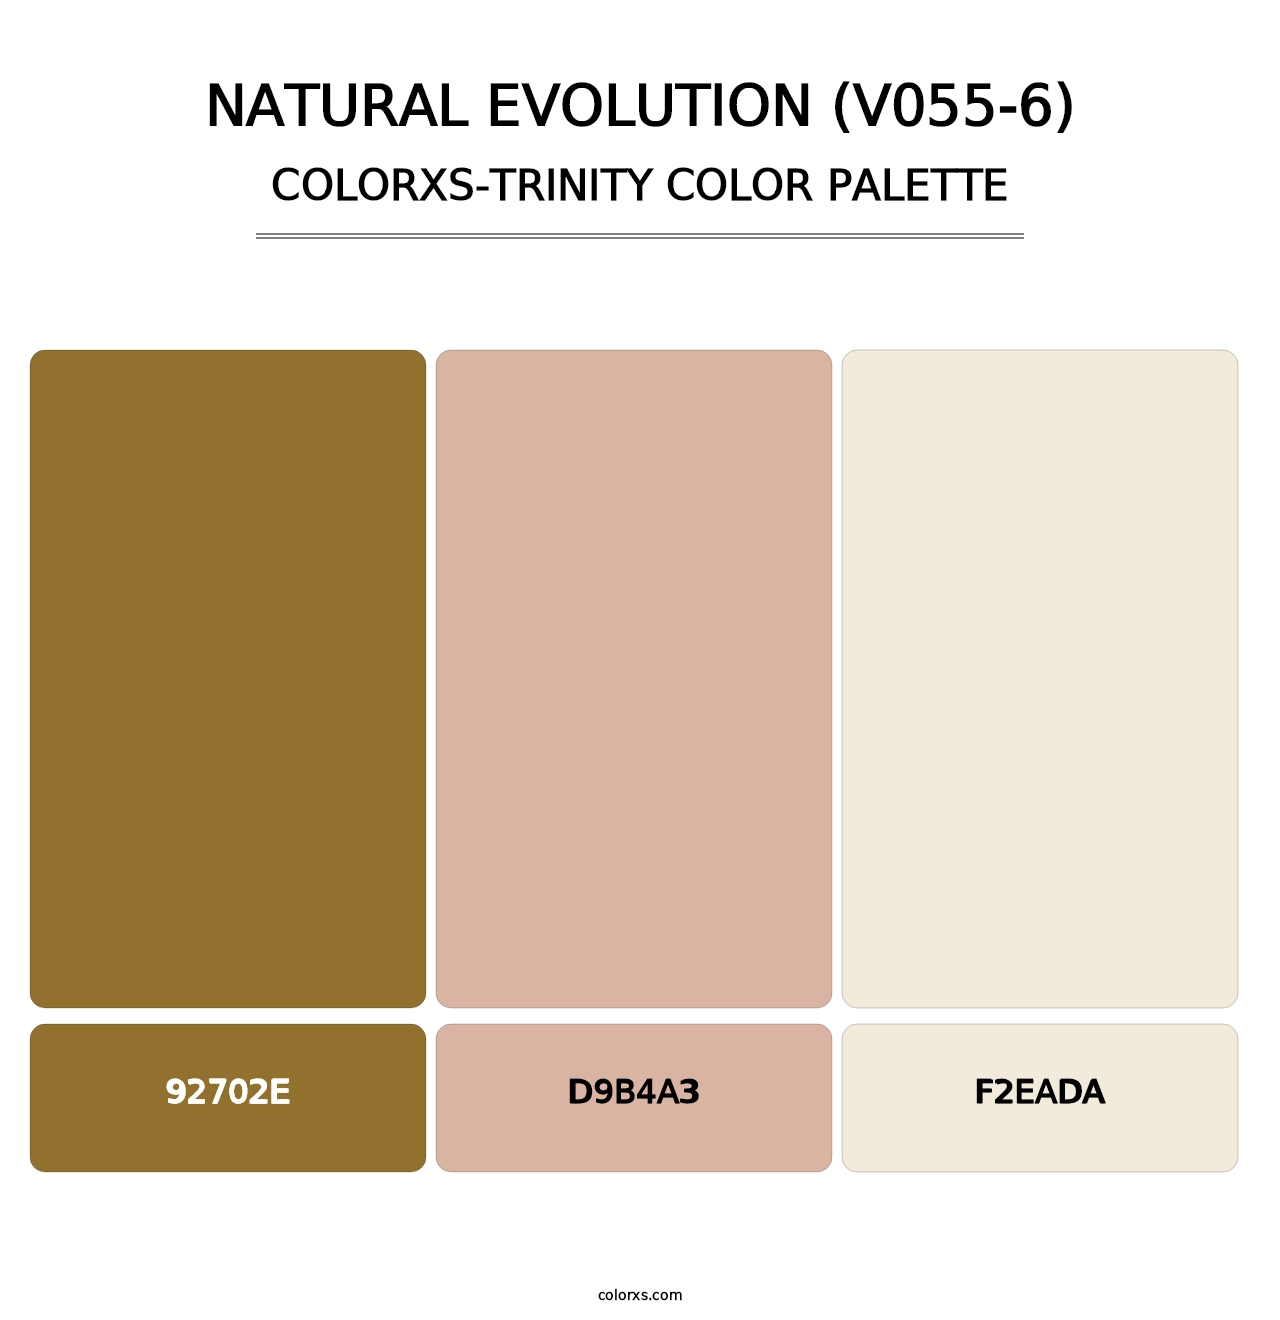 Natural Evolution (V055-6) - Colorxs Trinity Palette